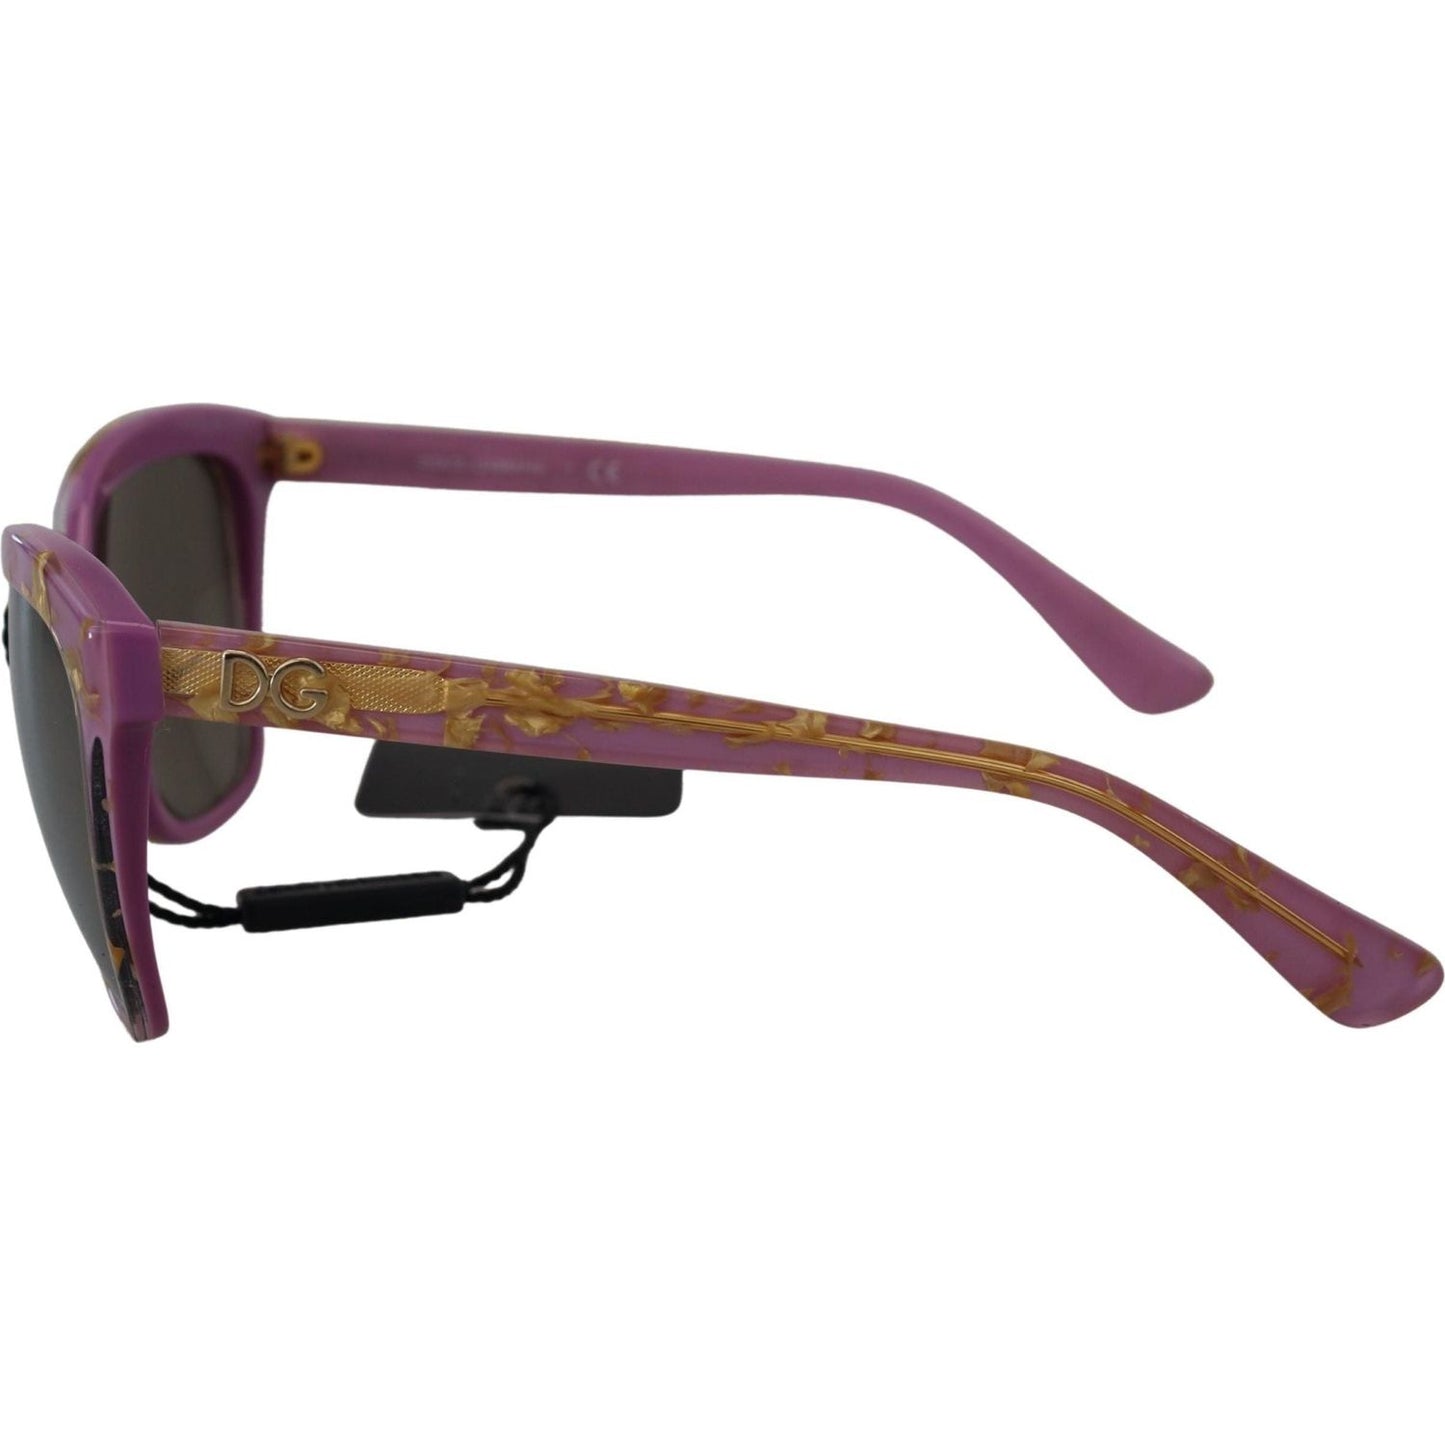 Dolce & Gabbana Elegant Violet Acetate Sunglasses violet-full-rim-rectangle-frame-shades-dg4251-sunglasses IMG_5186-scaled-5991cd79-dd7.jpg